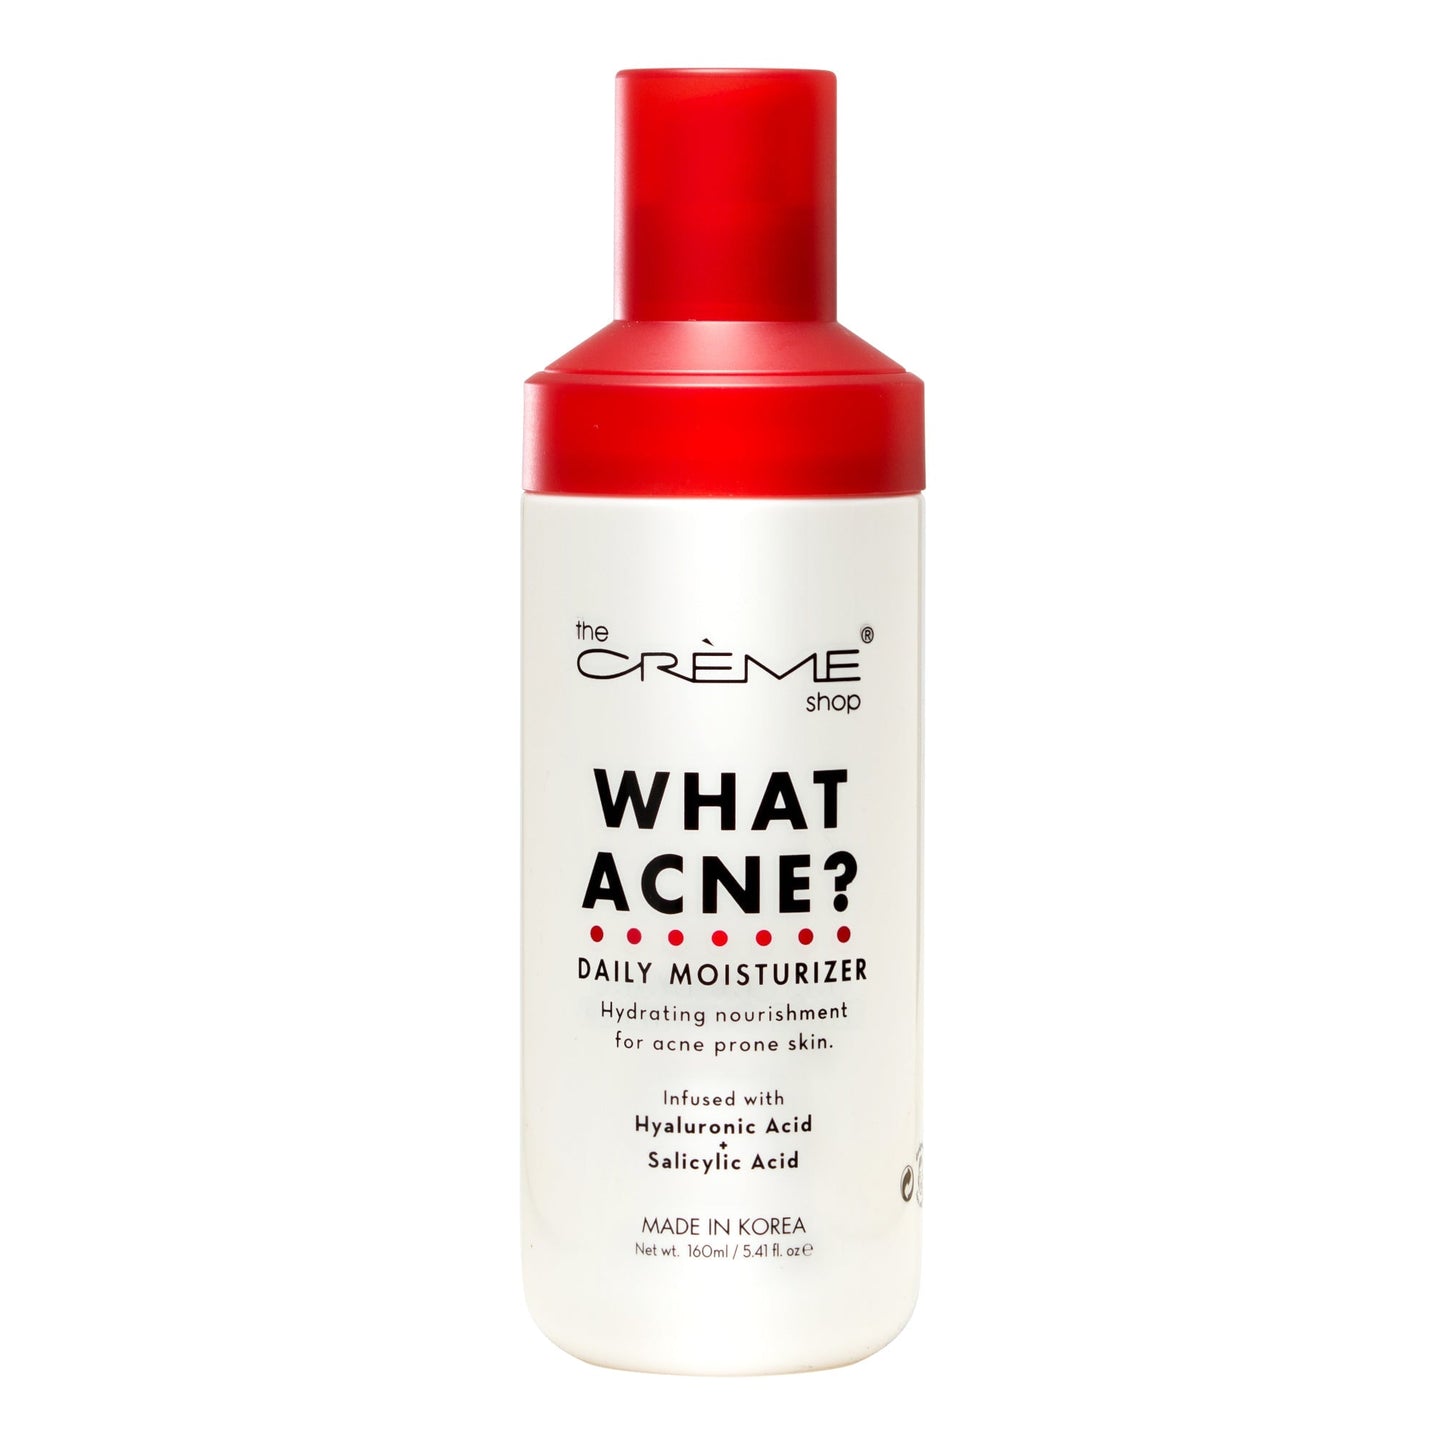 What Acne? - Daily Moisturizer Facial Moisturizers The Crème Shop 